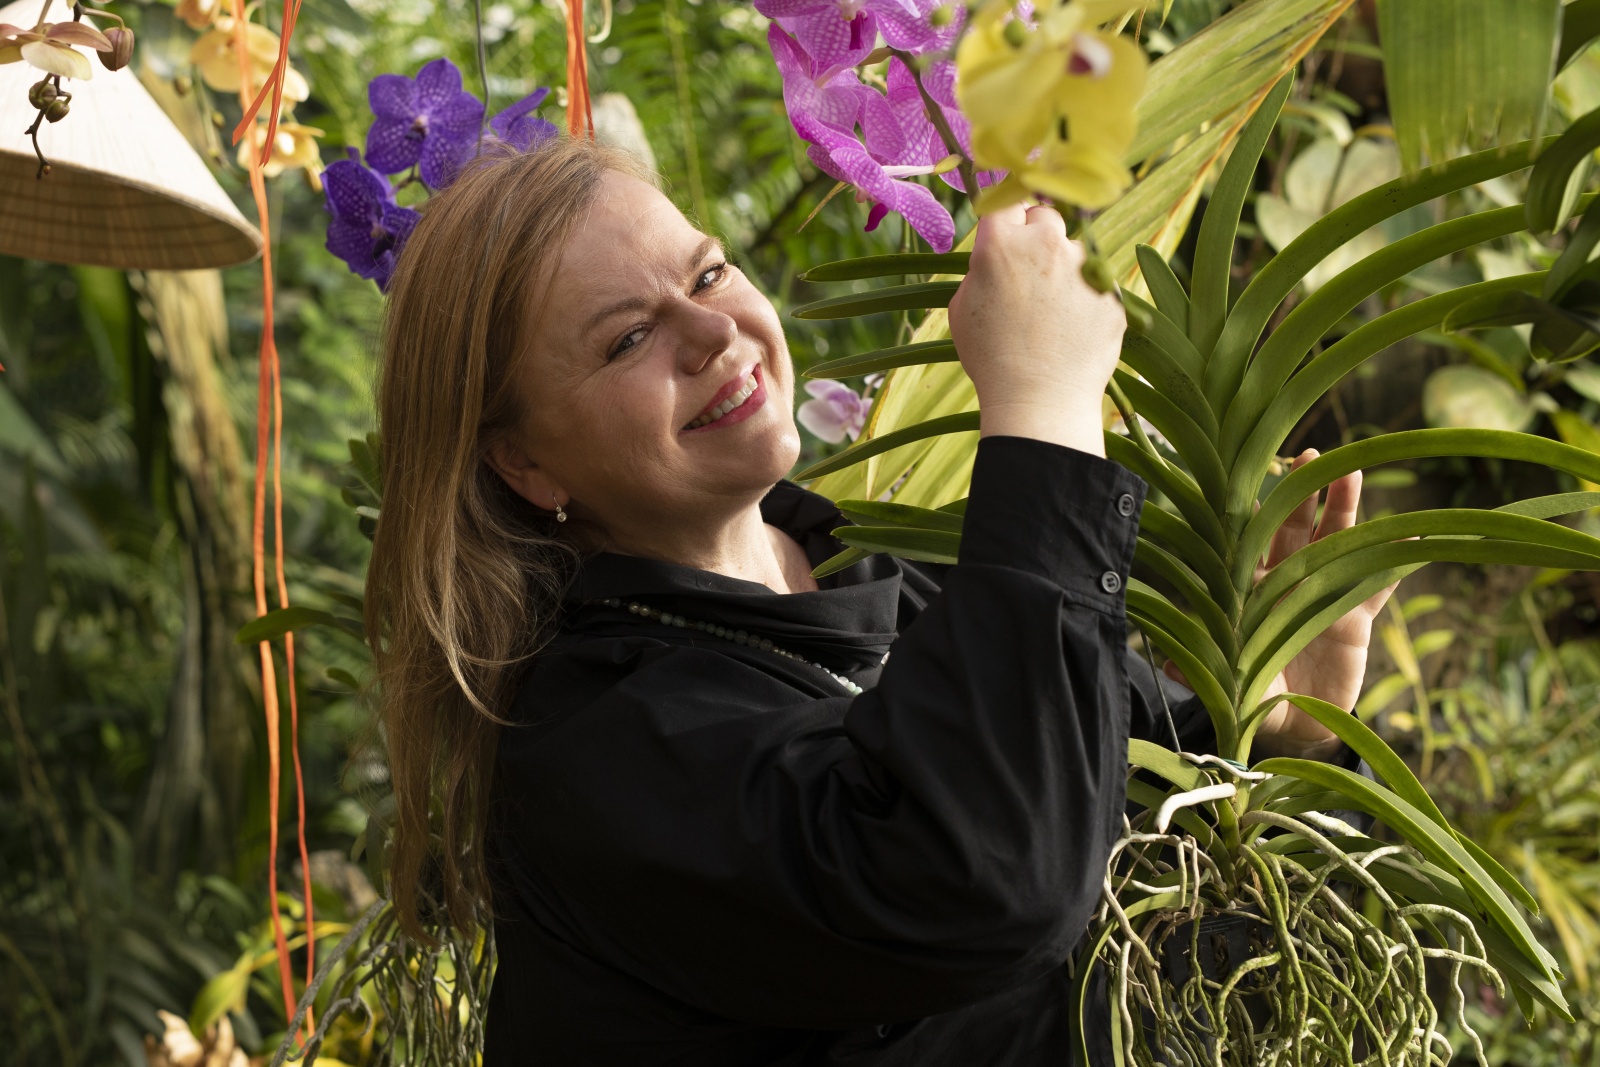 Botanická zahrada Praha zahájila výstavu orchidejí ve skleníku Fata Morgana  - Pražský deník